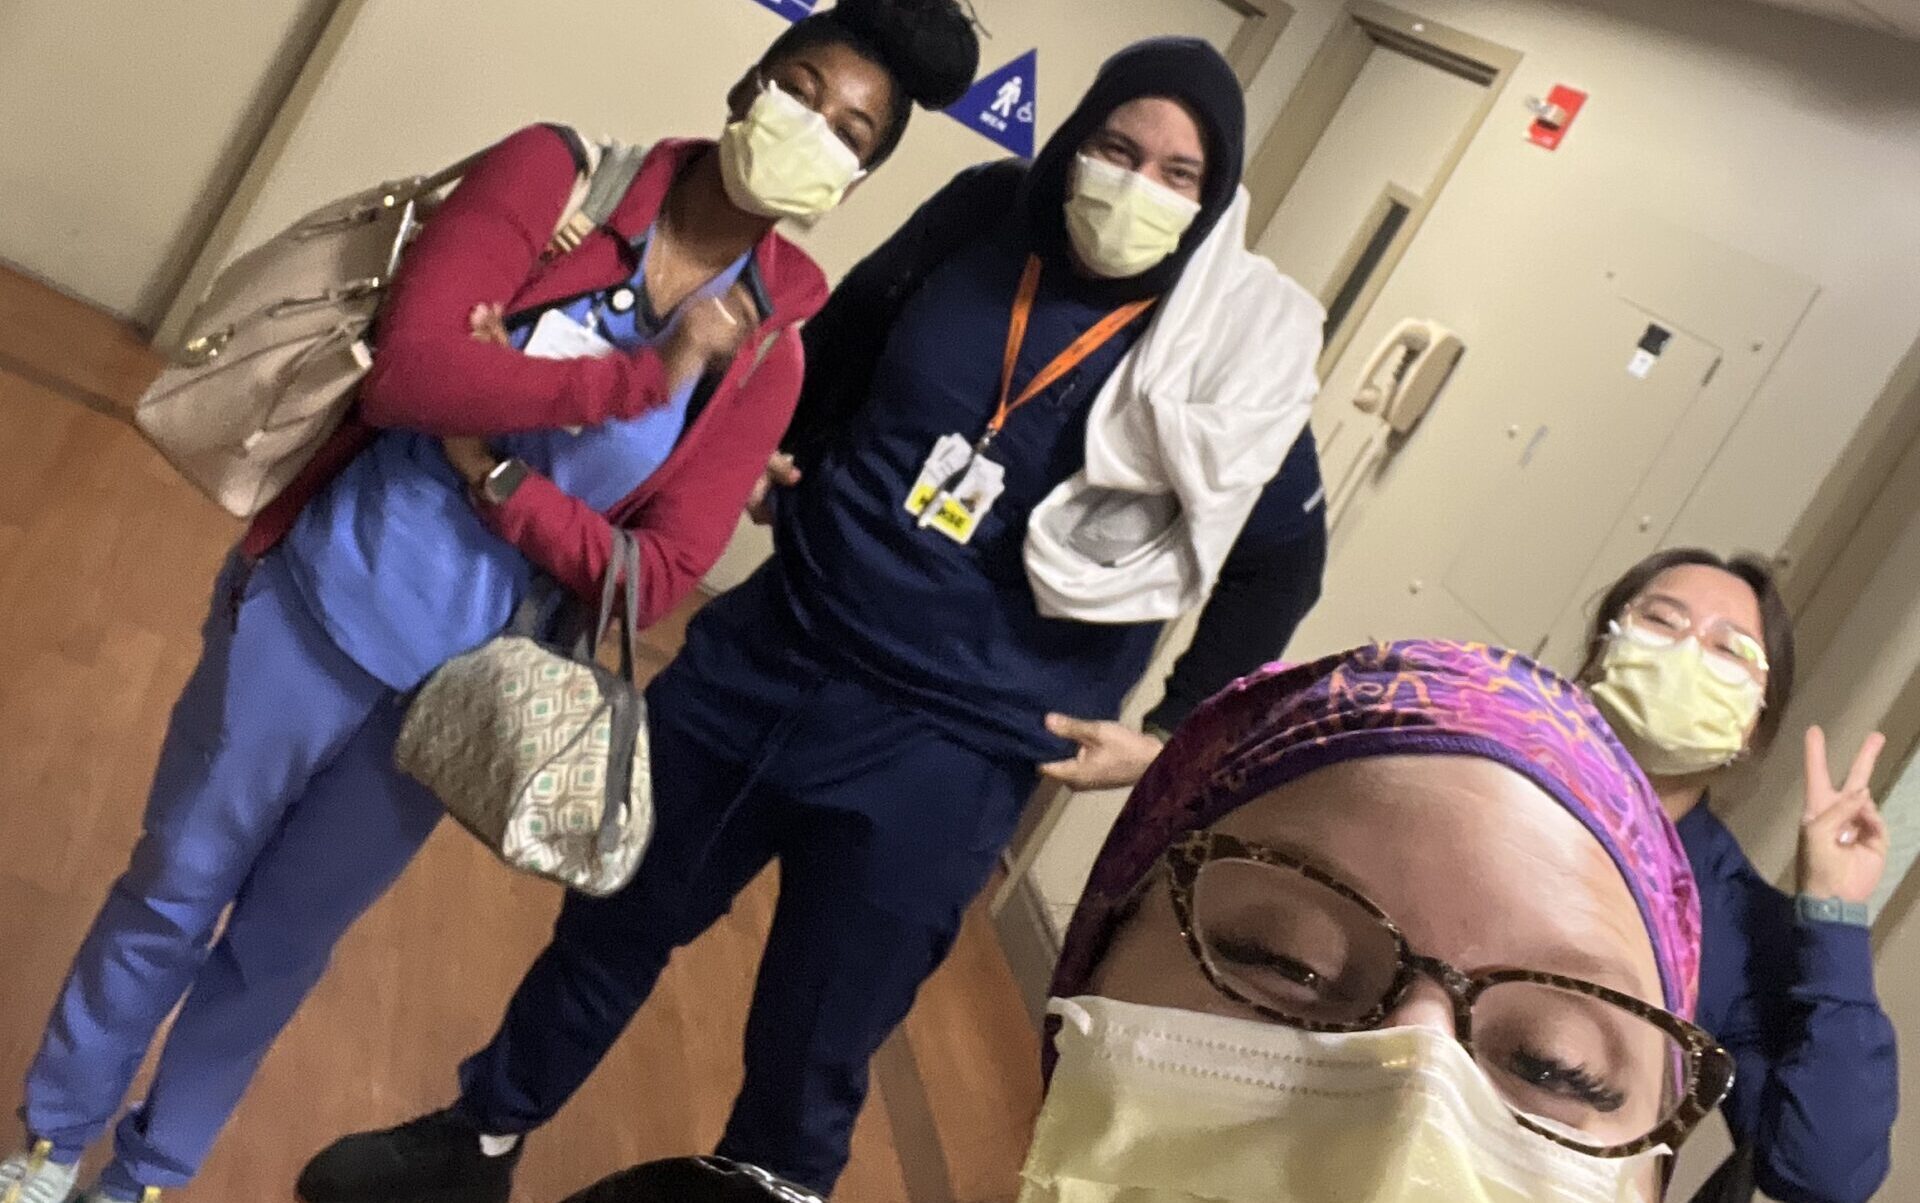 LTAC travel nursing